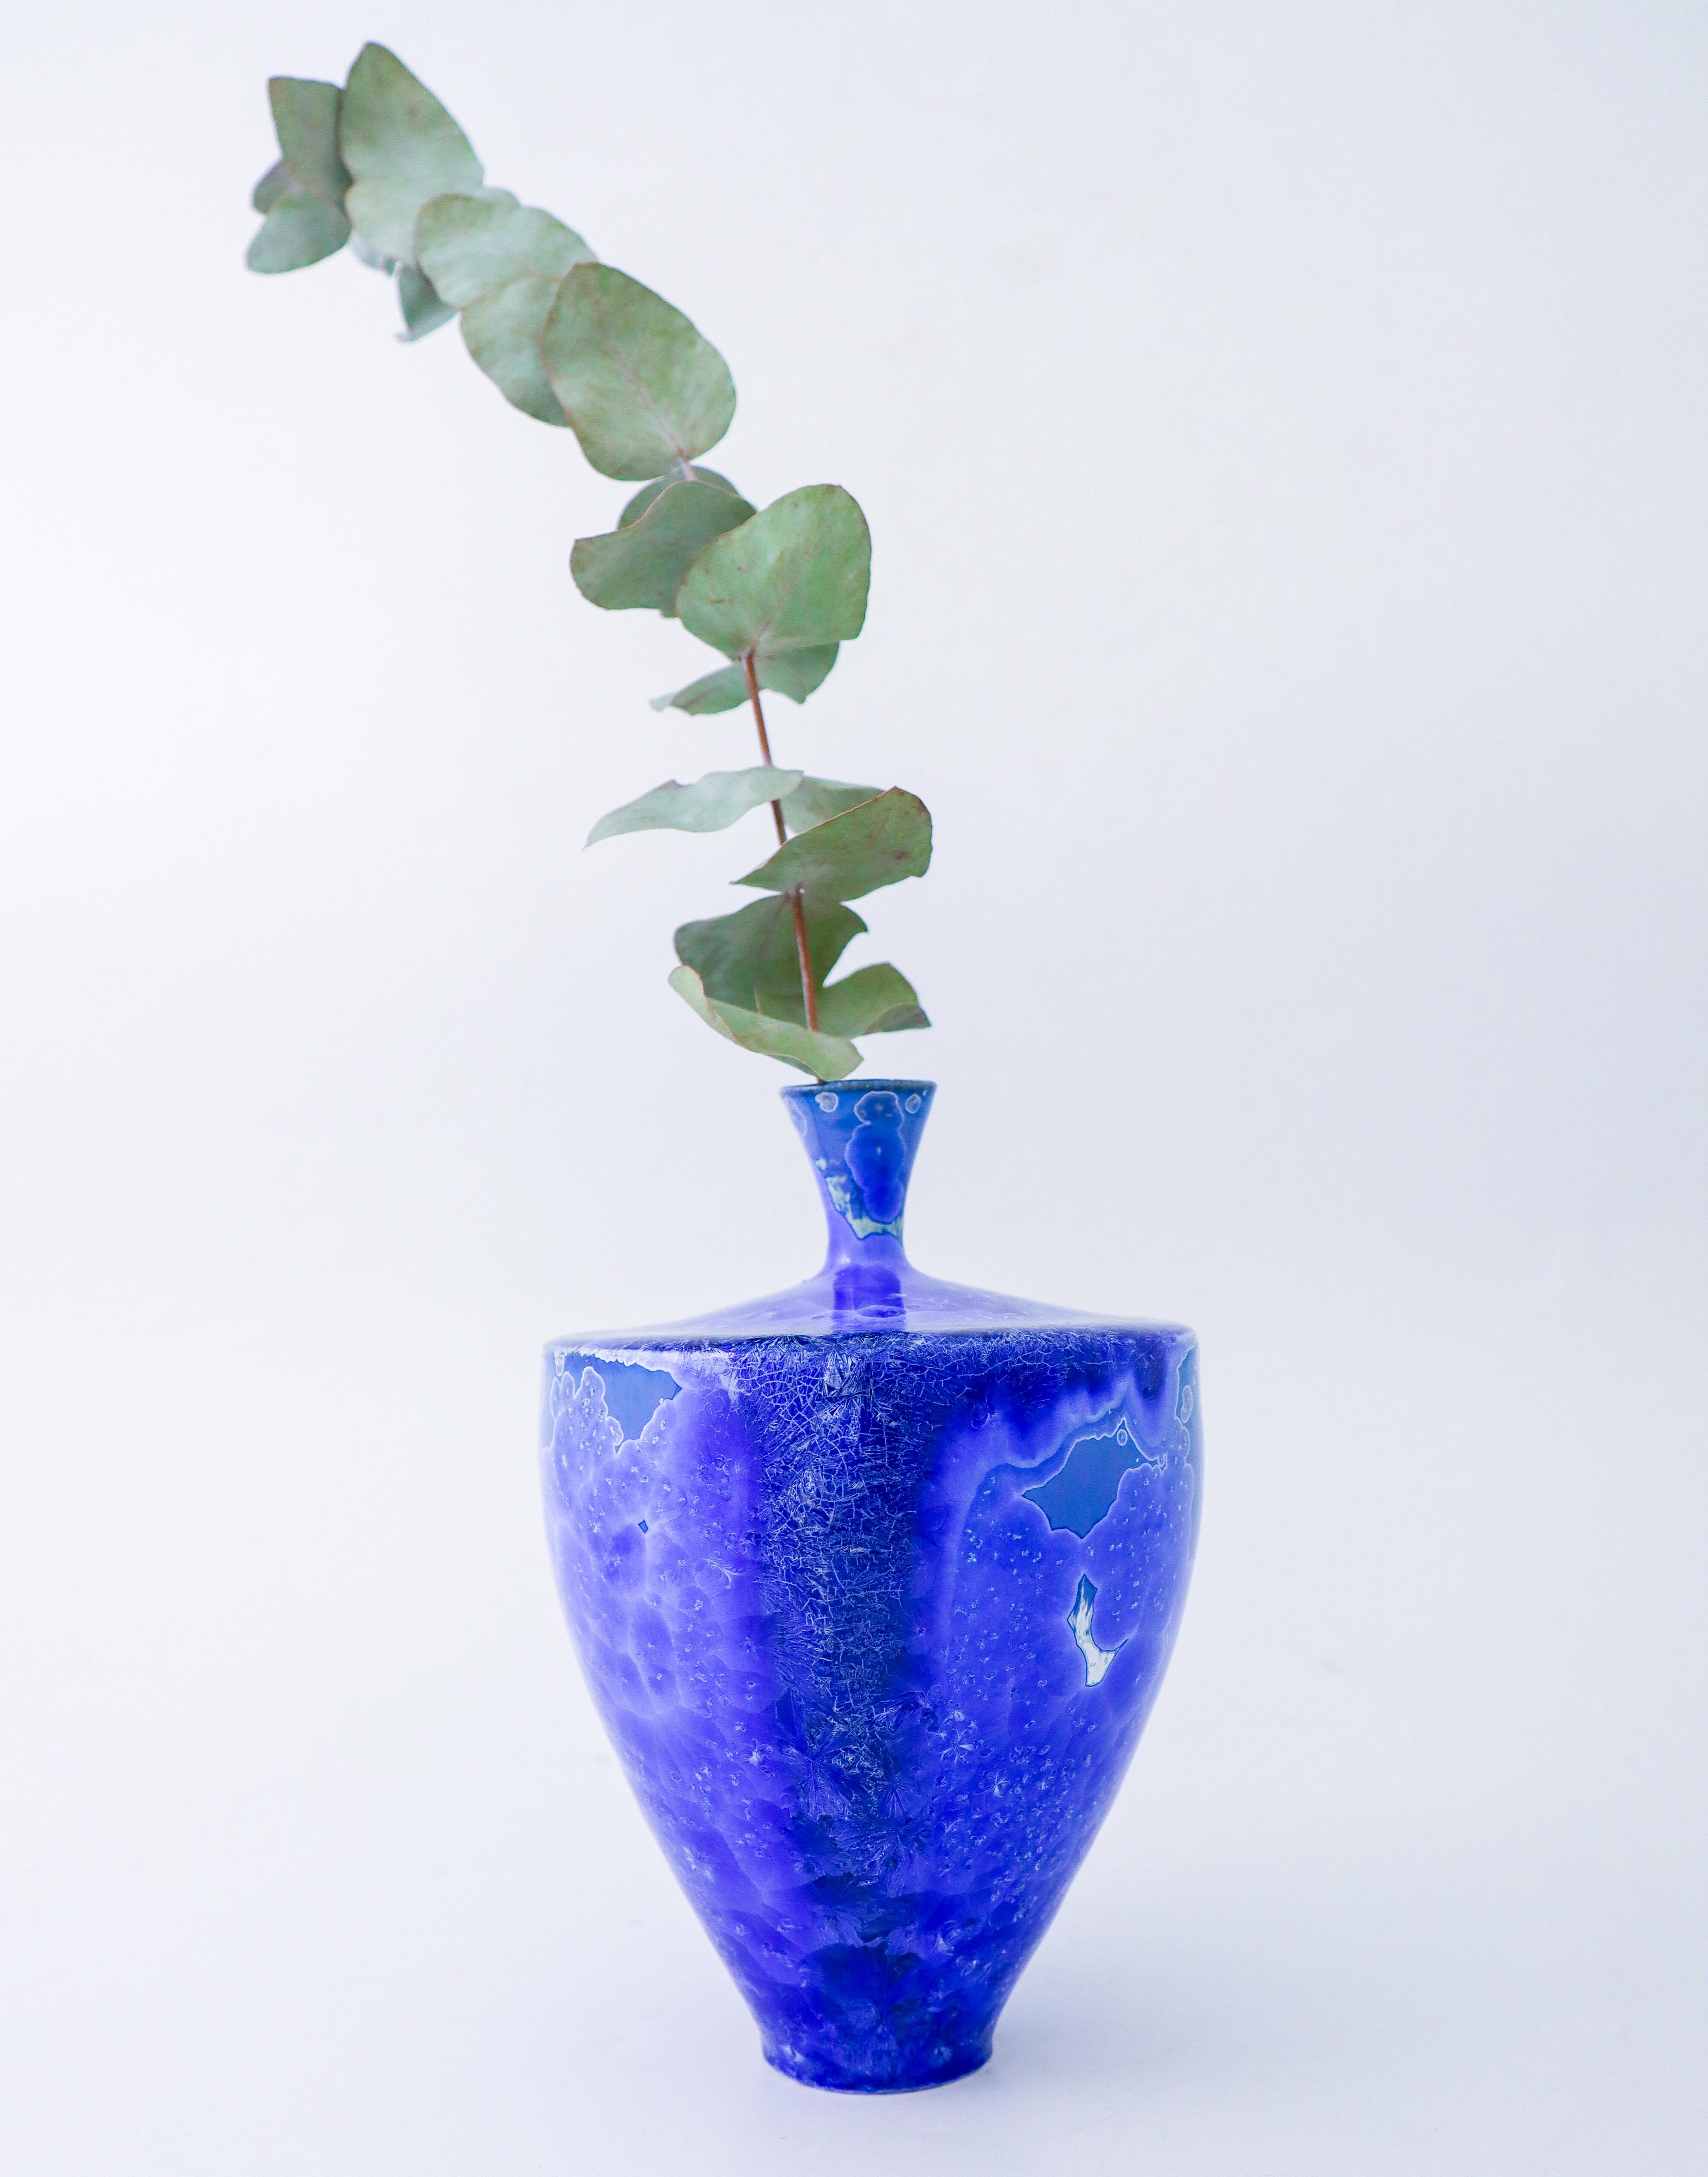 Glazed Isak Isaksson Deep Blue Ceramic Vase Crystalline Glaze Contemporary Artist For Sale